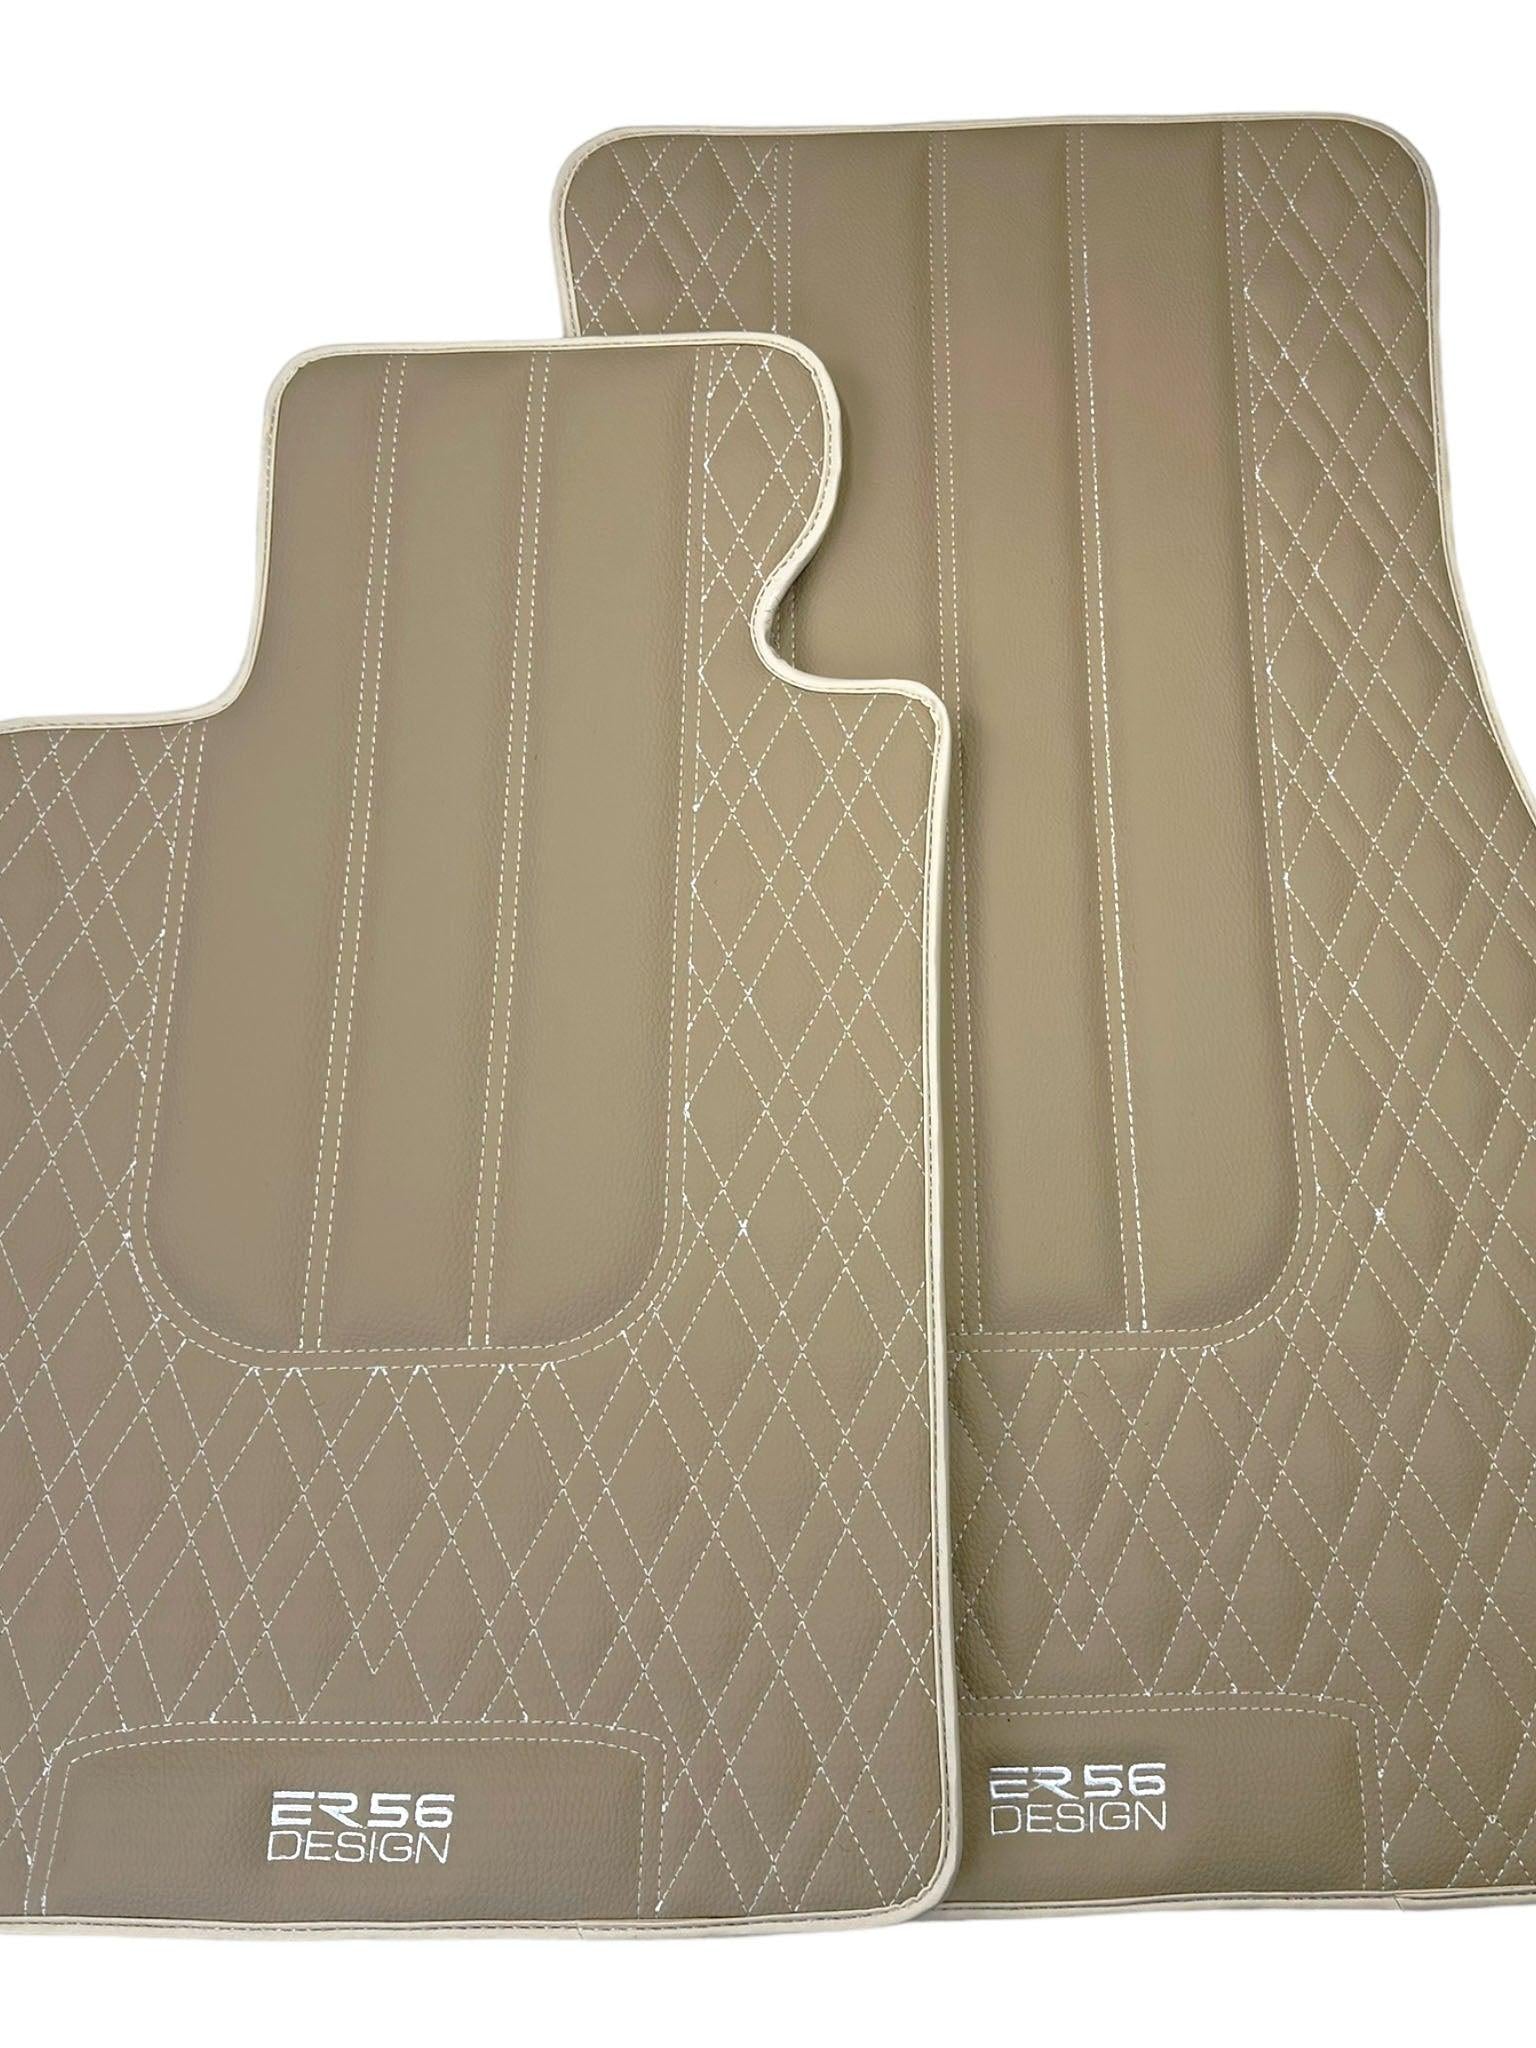 Beige Leather Floor Floor Mats For BMW 7 Series E65 | Fighter Jet Edition AutoWin Brand |Sky Blue Trim